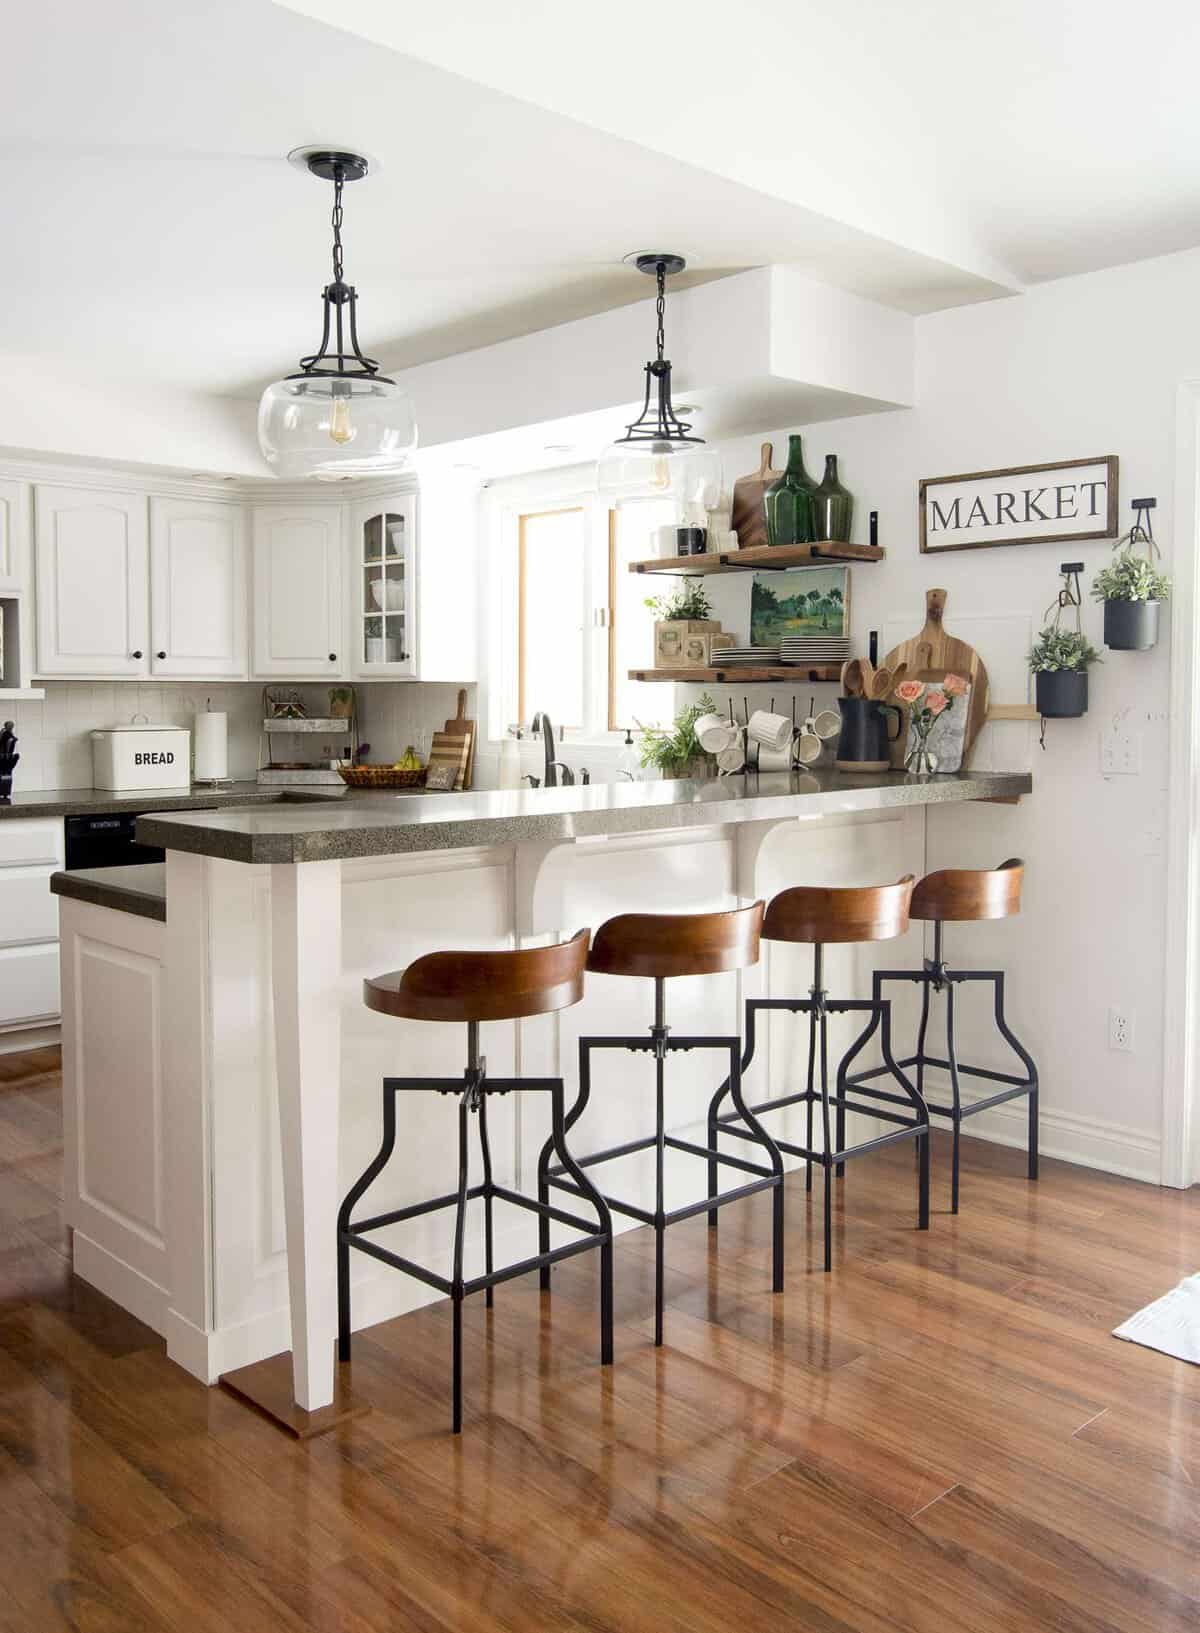 How To Decorate Kitchen Shelves Grace, Kitchen Shelving Decor Ideas